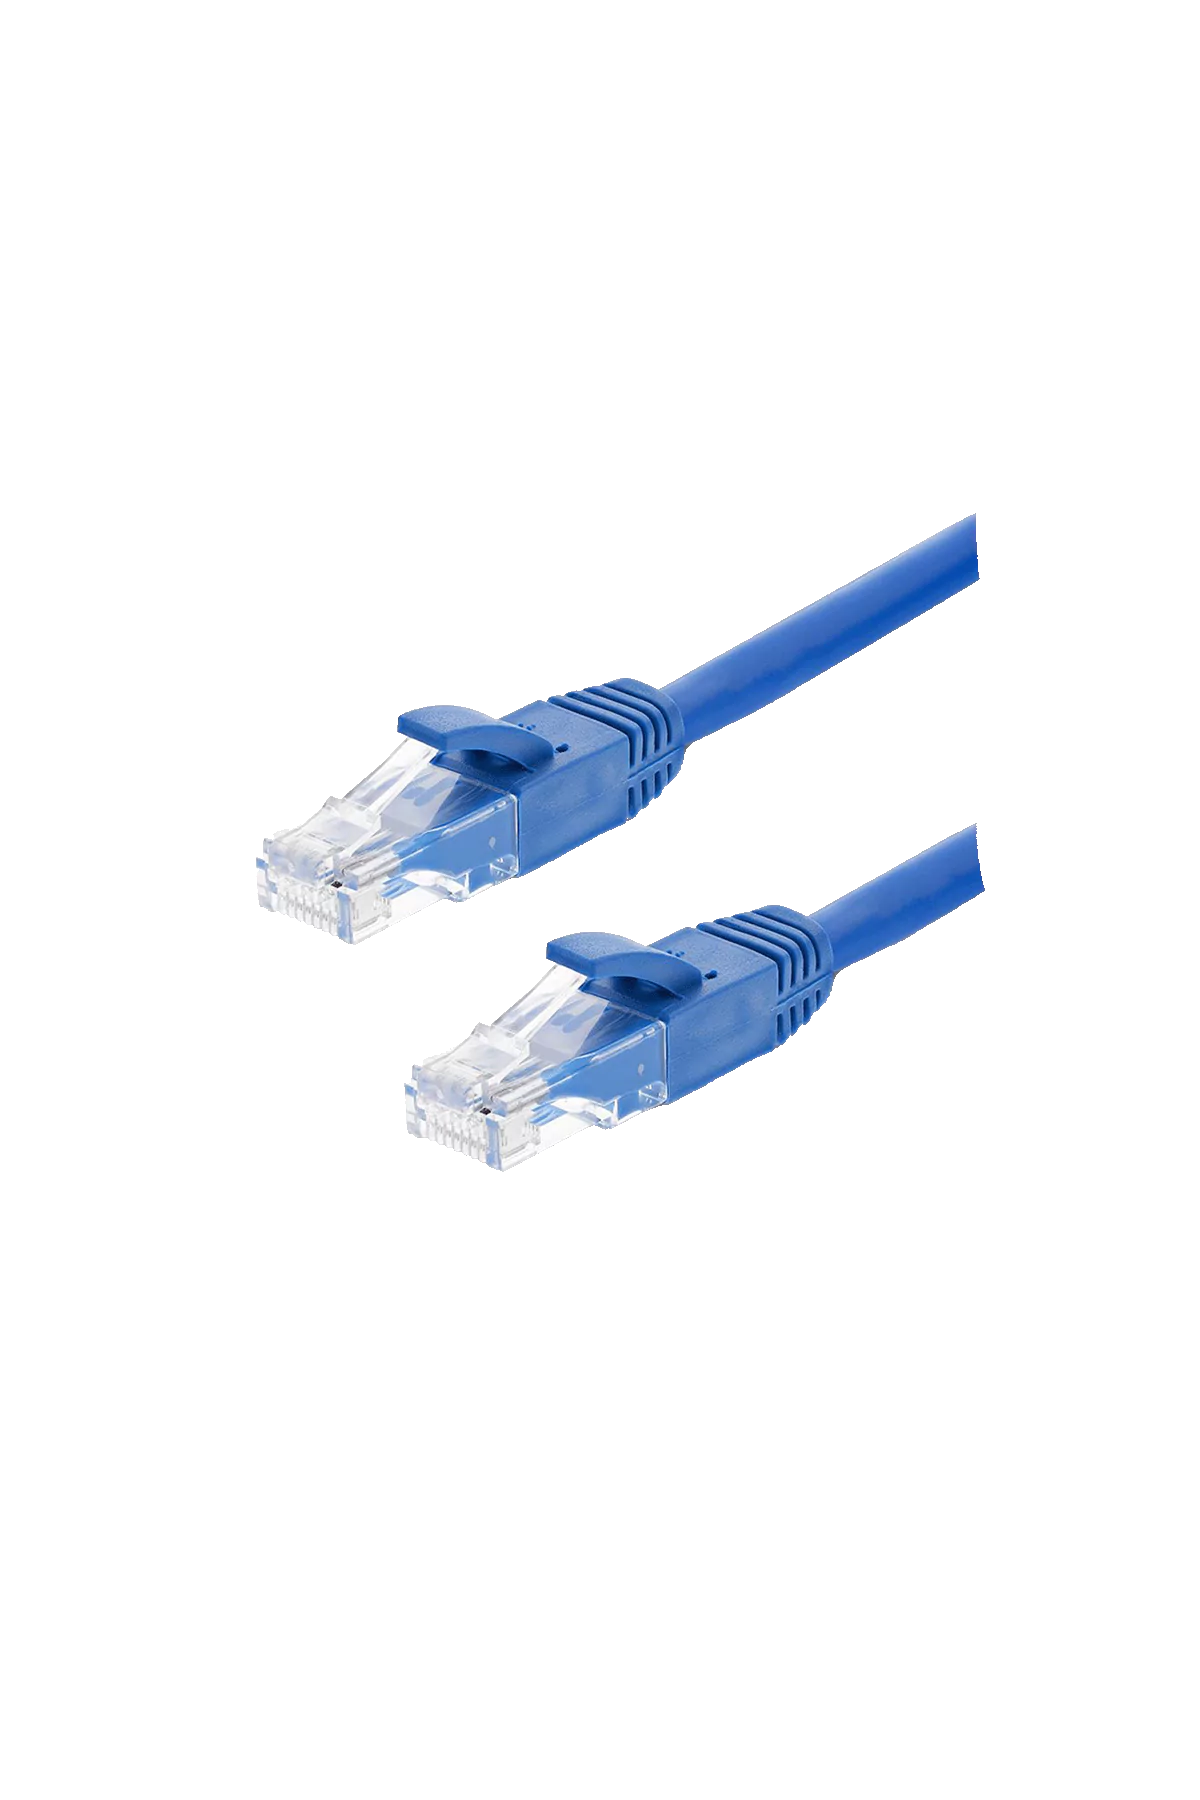 Astrotek CAT6 Cable 1M -0.5M Blue AT-RJ45BLU6-1M-AT-RJ45BLU6-0.5M